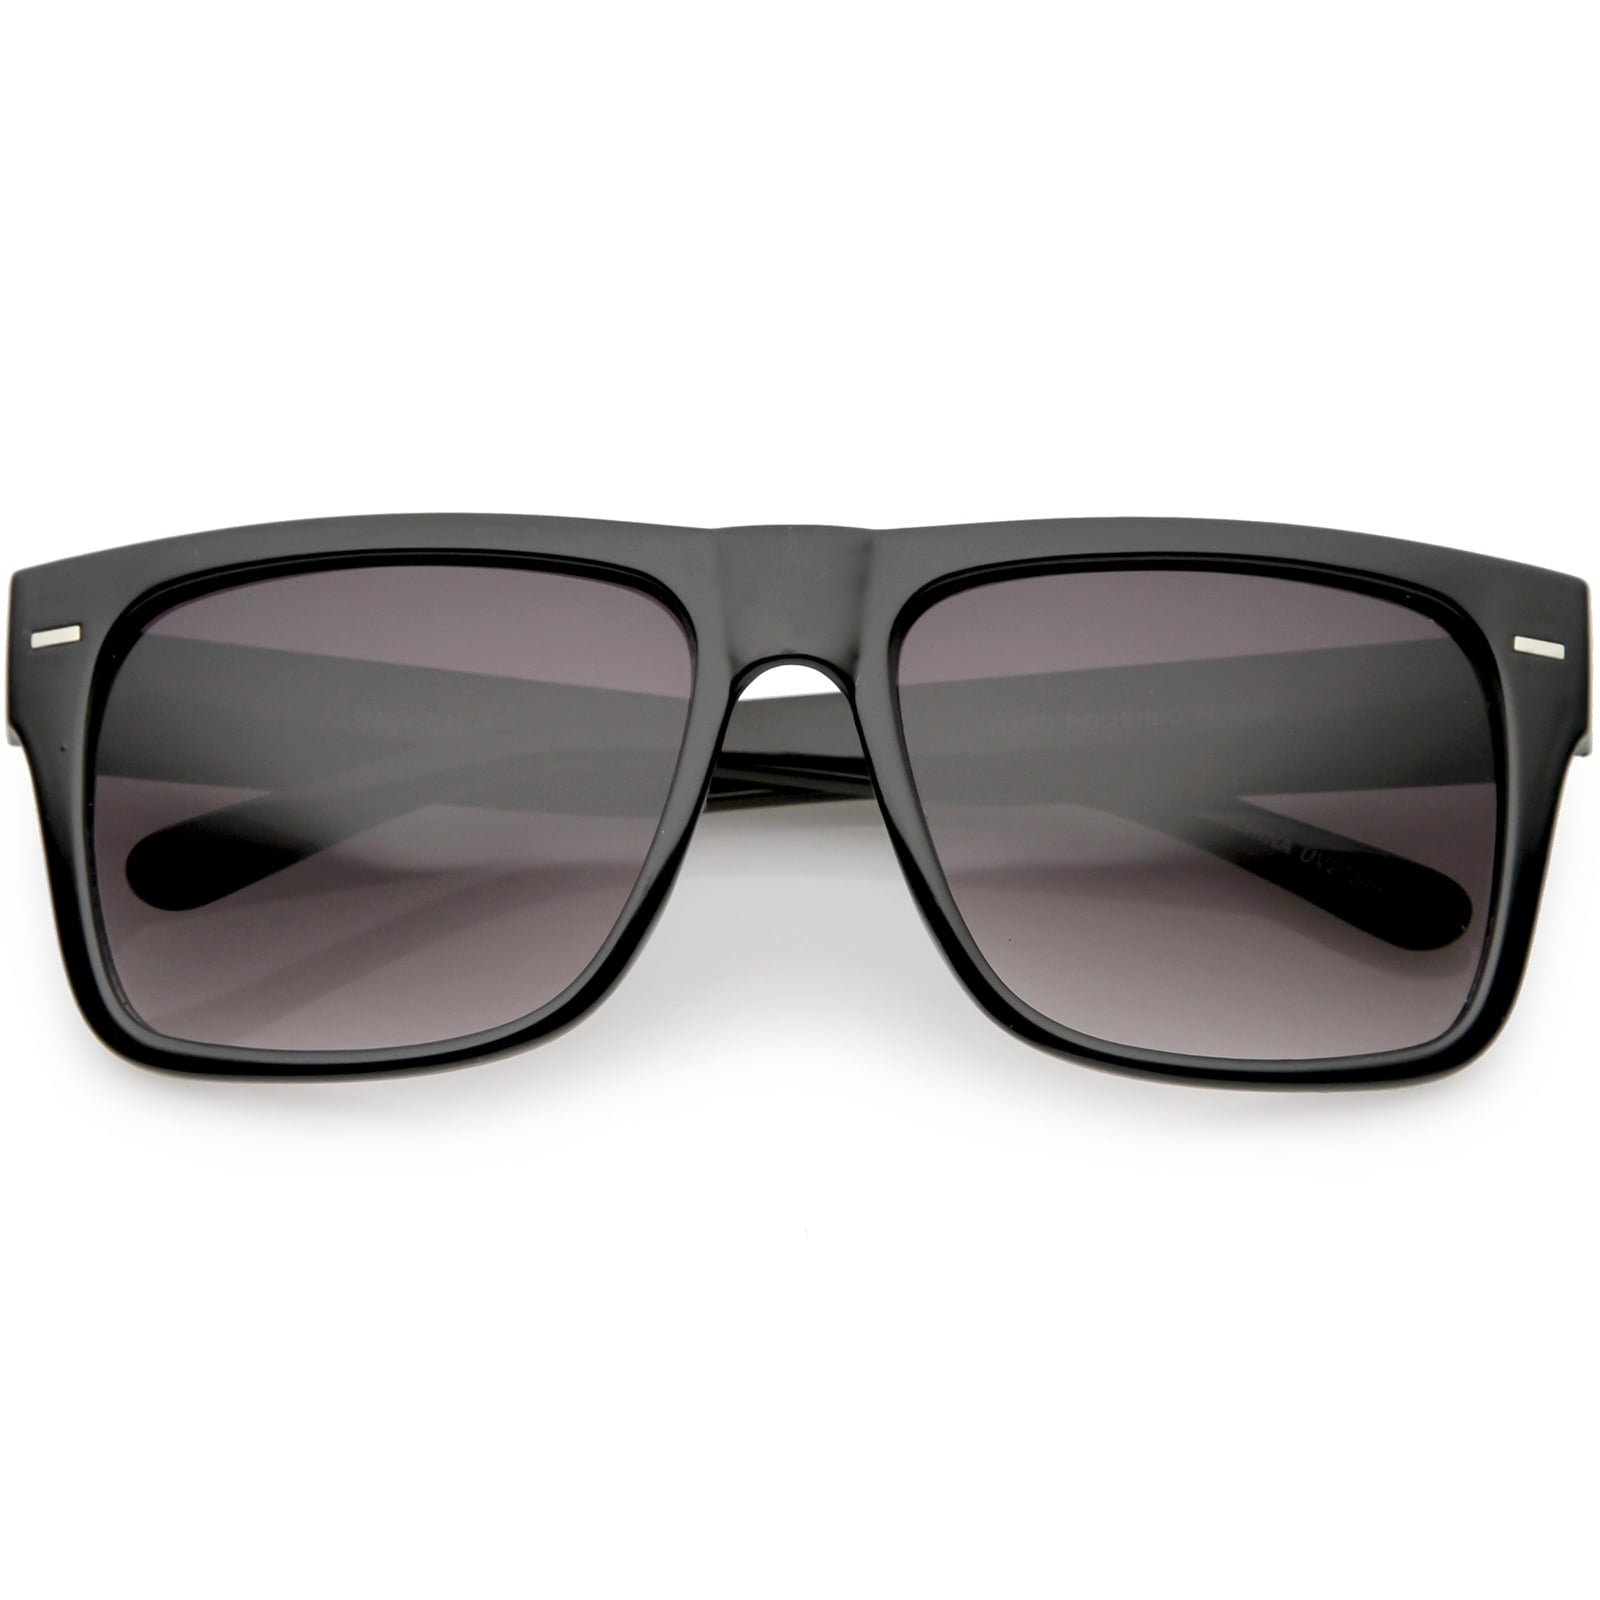 Retro Horn Rimmed Square Sunglasses Neutral Colored Lens 57mm (Shiny ...